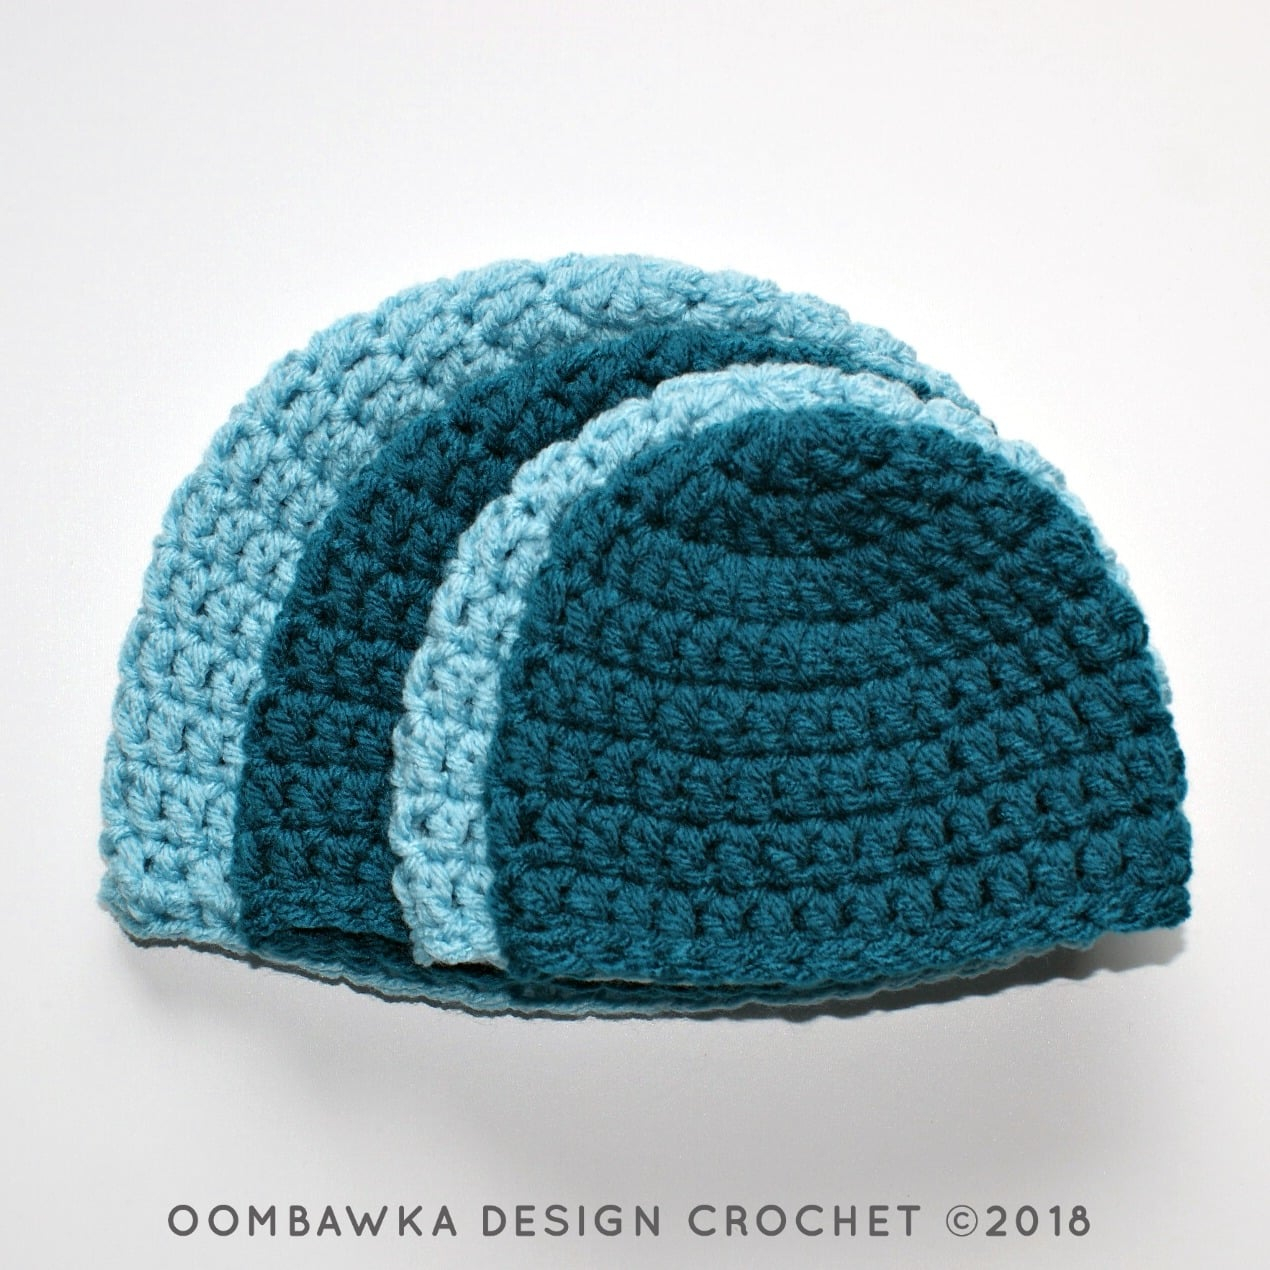 Free Easy Crochet Hat Patterns Simple Double Crochet Hat Pattern Oombawka Design Crochet